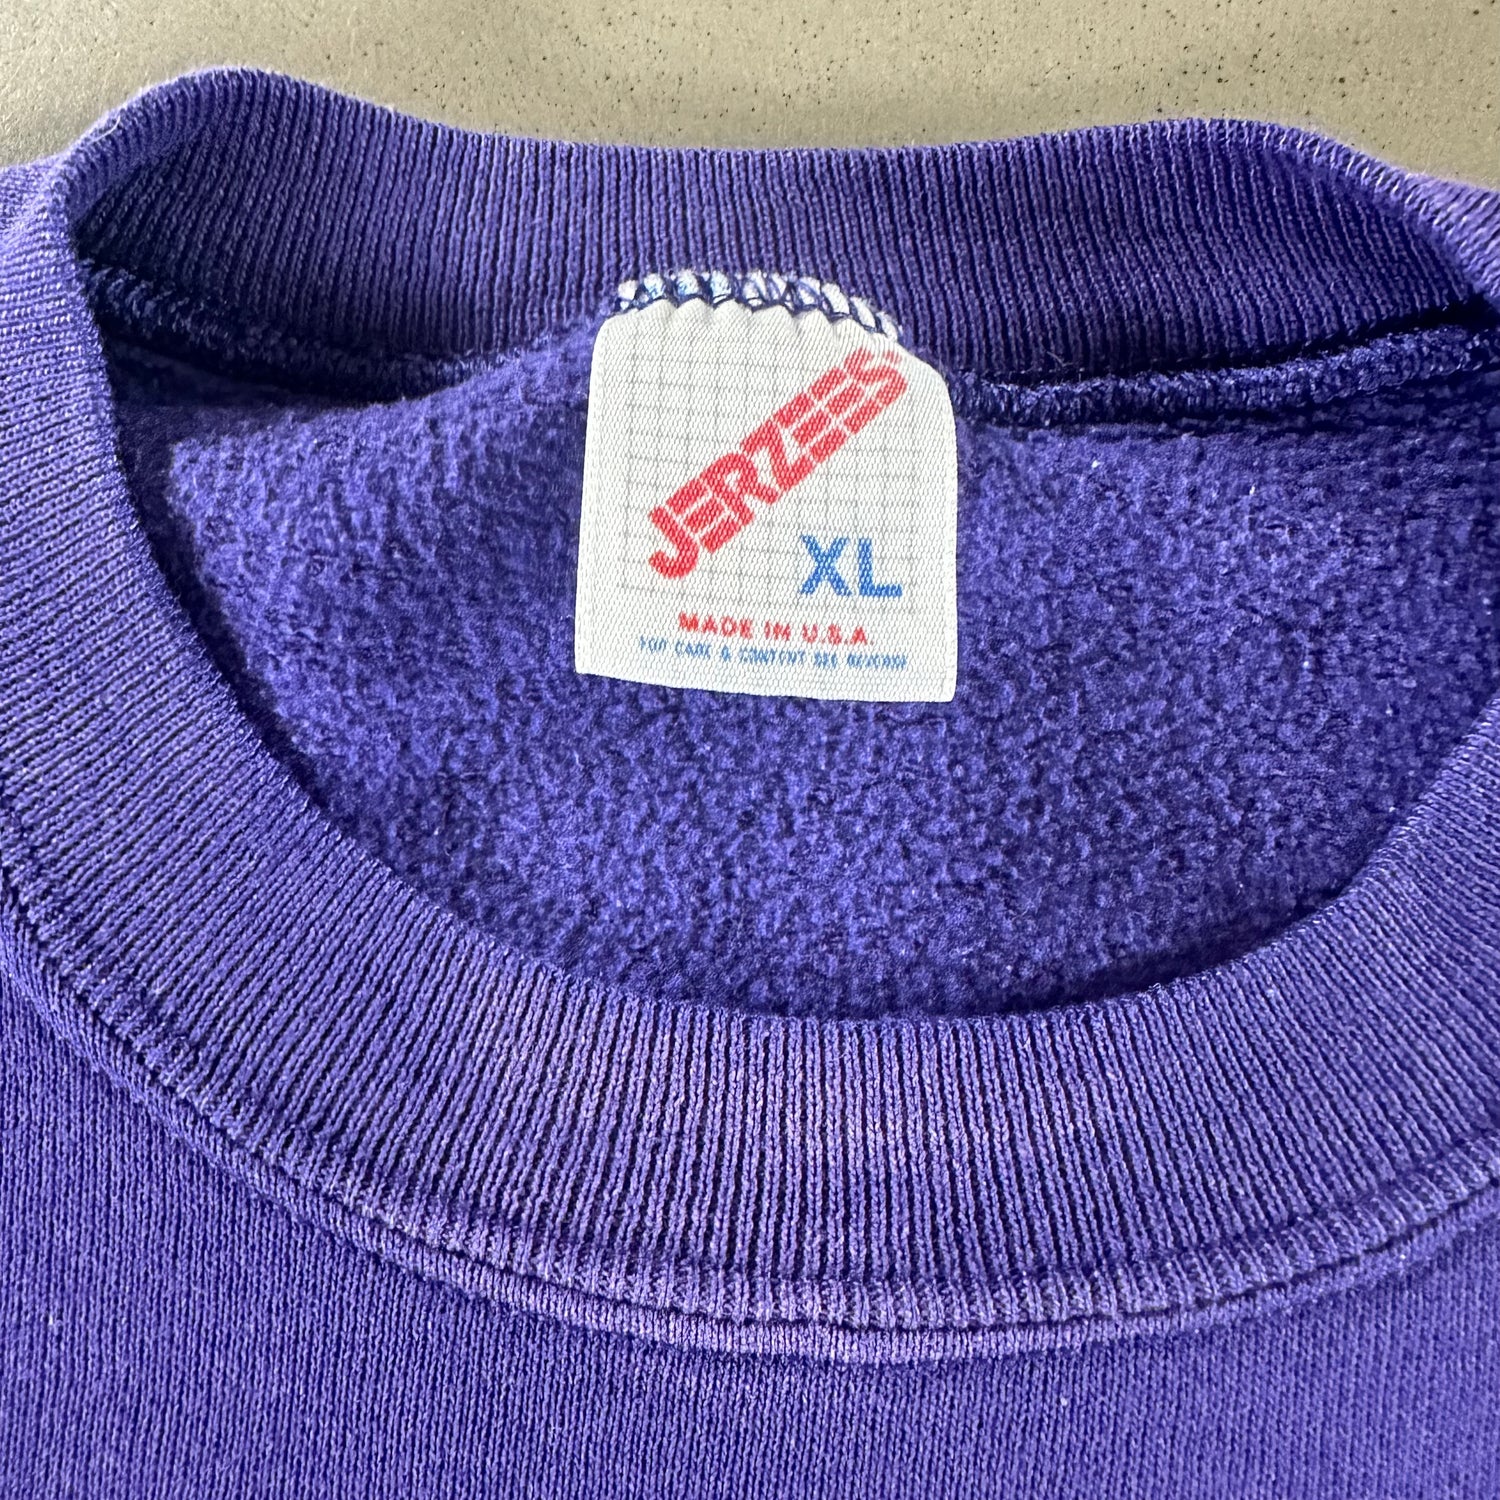 Vintage 1990s Whale Tail Sweatshirt size XL